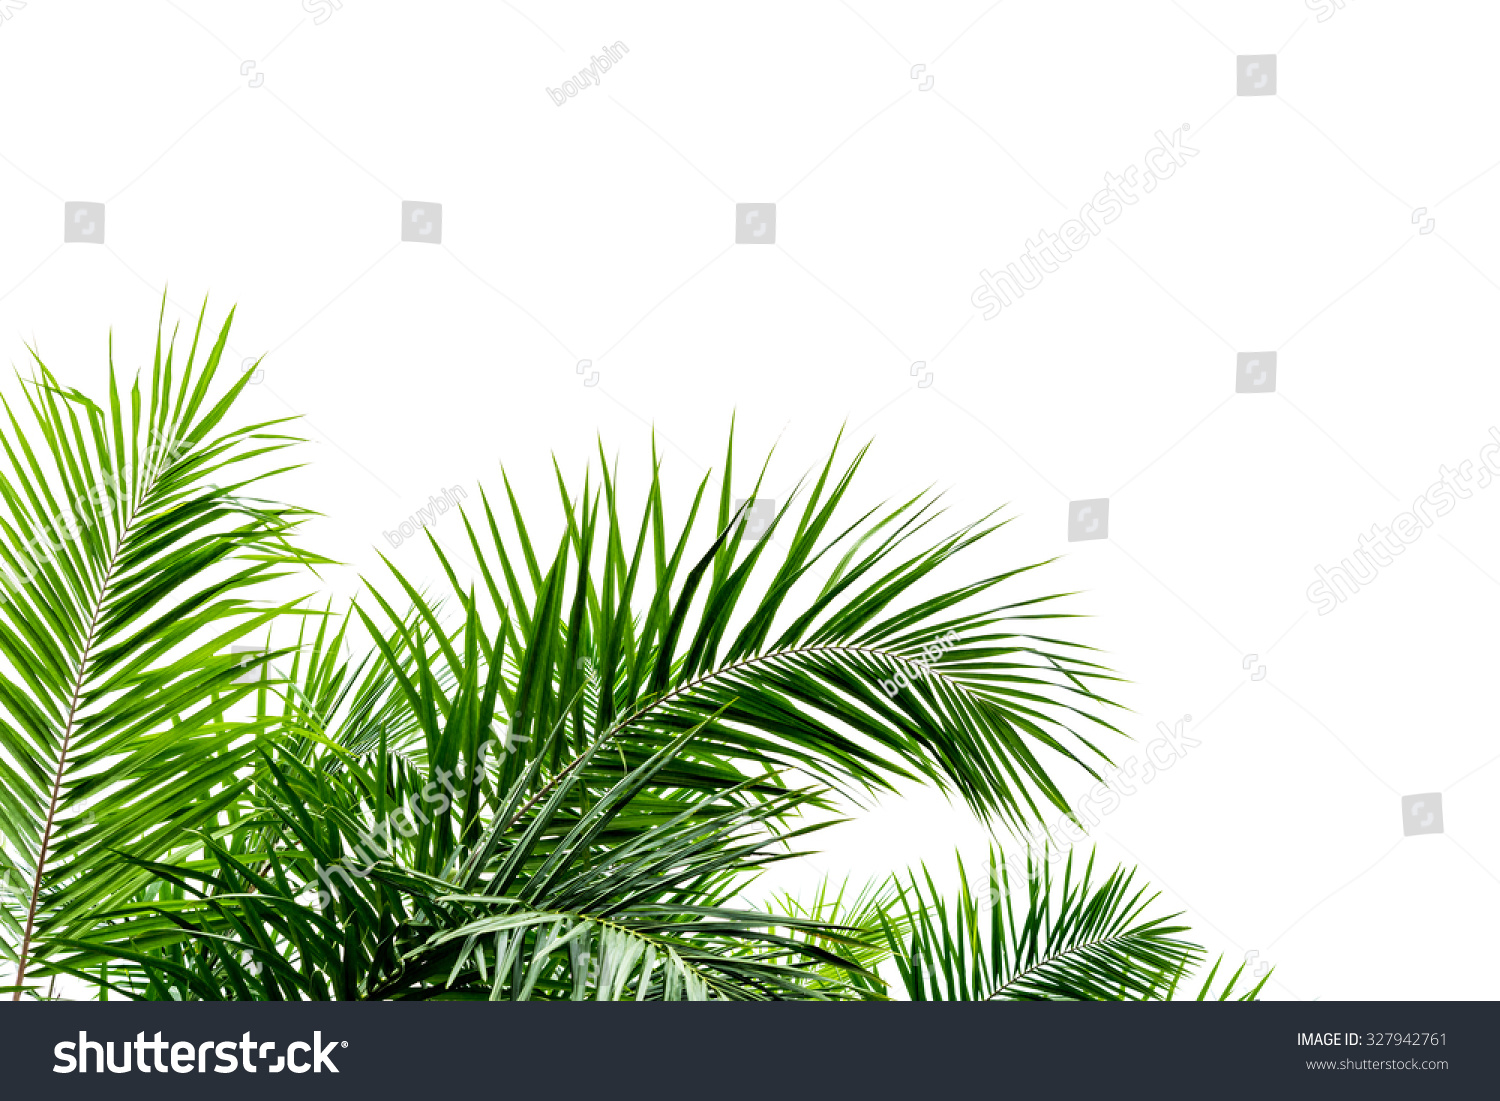 Palm leaf isolated on white background #327942761